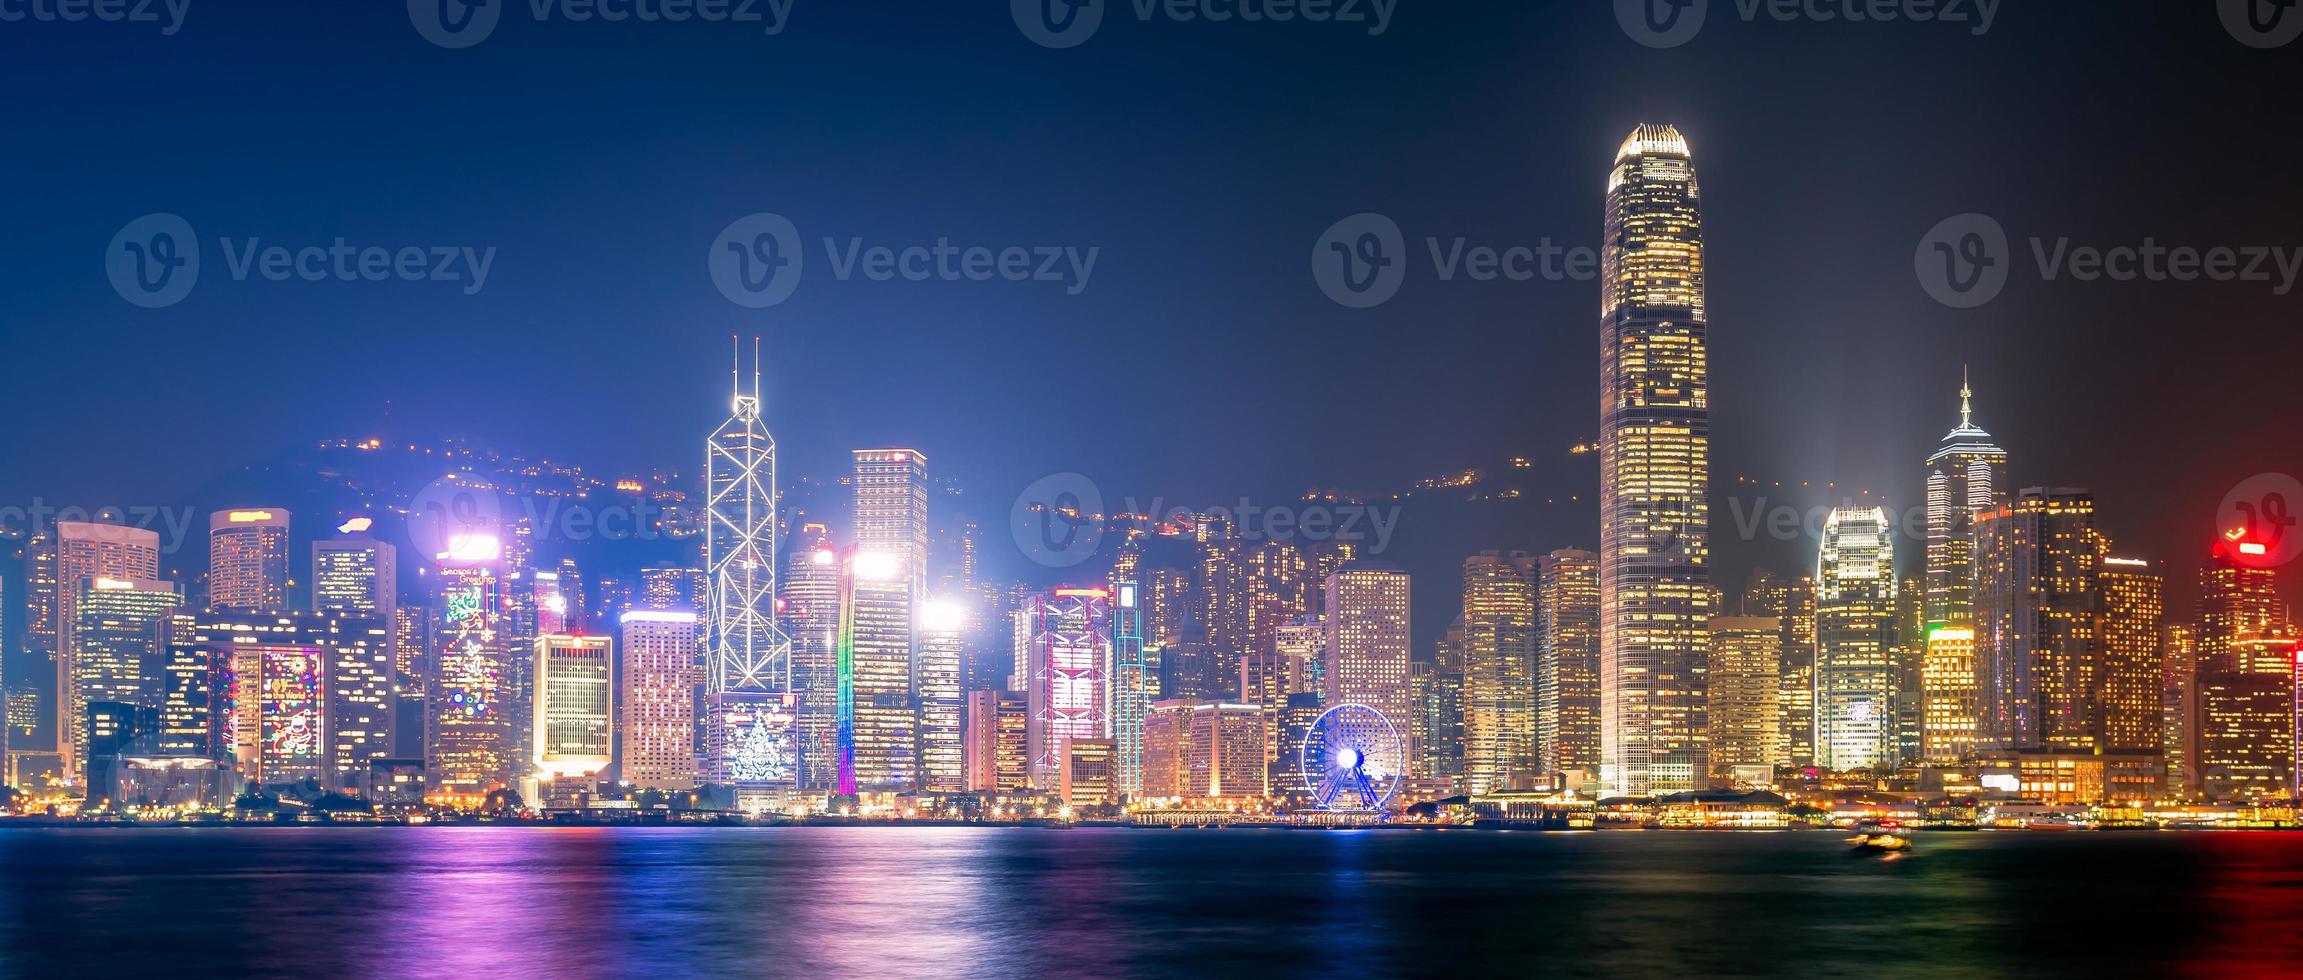 vista panorâmica de hong kong no centro da cidade a famosa vista da cidade do horizonte de hong kong durante o crepúsculo do lado de kowloon em hong kong. foto